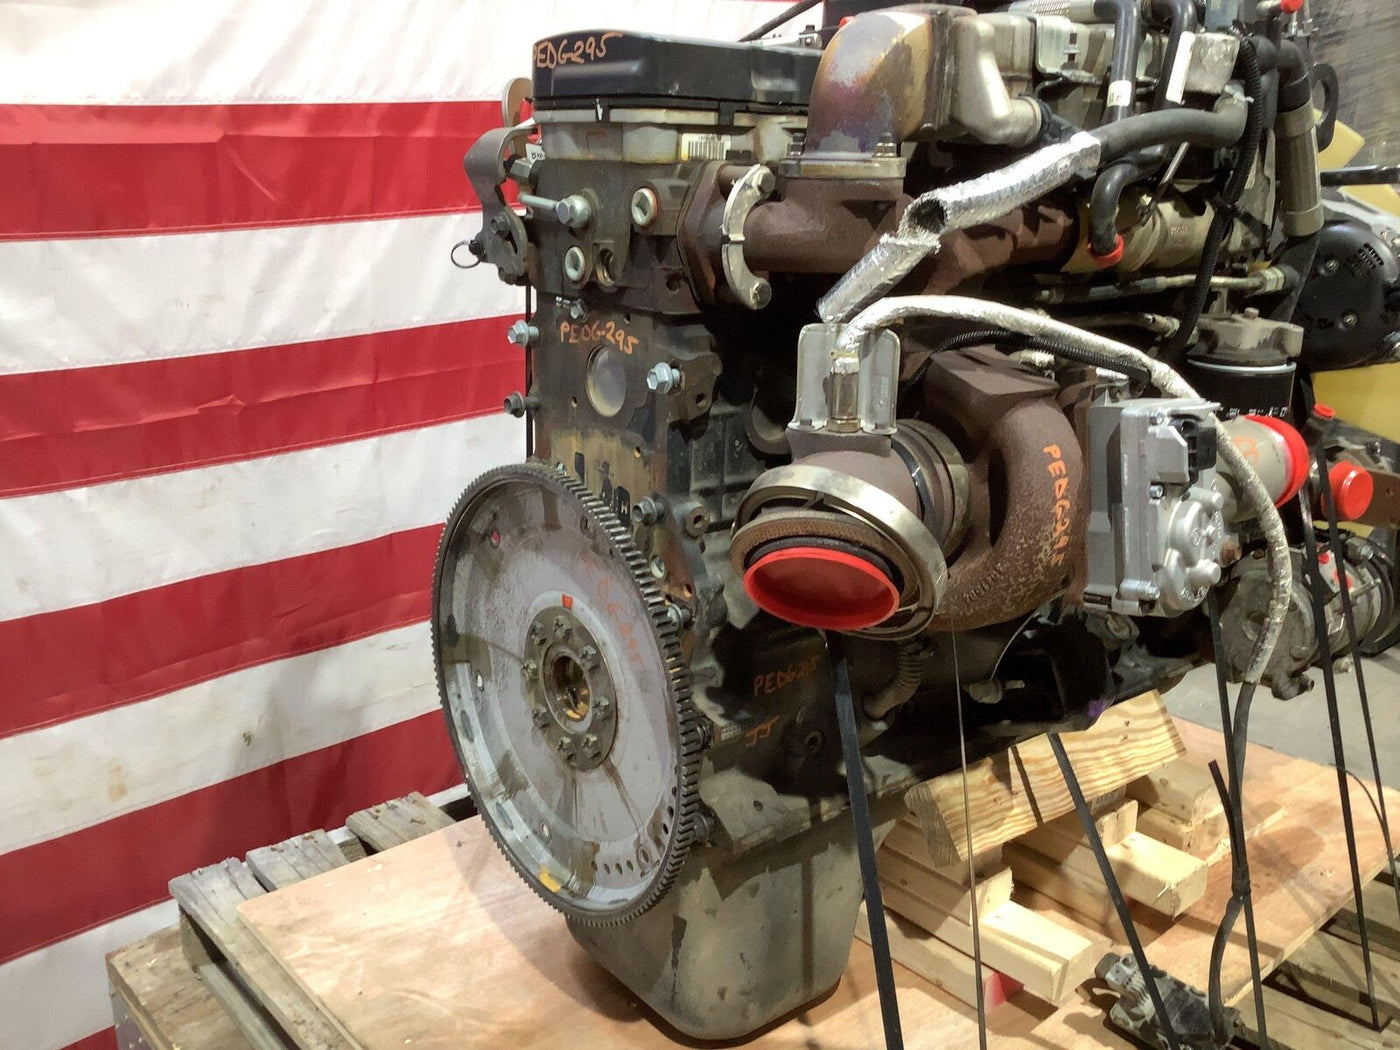 13-18 Ram 2500 6.7L Cummins Turbo Diesel Engine Liftout (Unable To Test) 140K